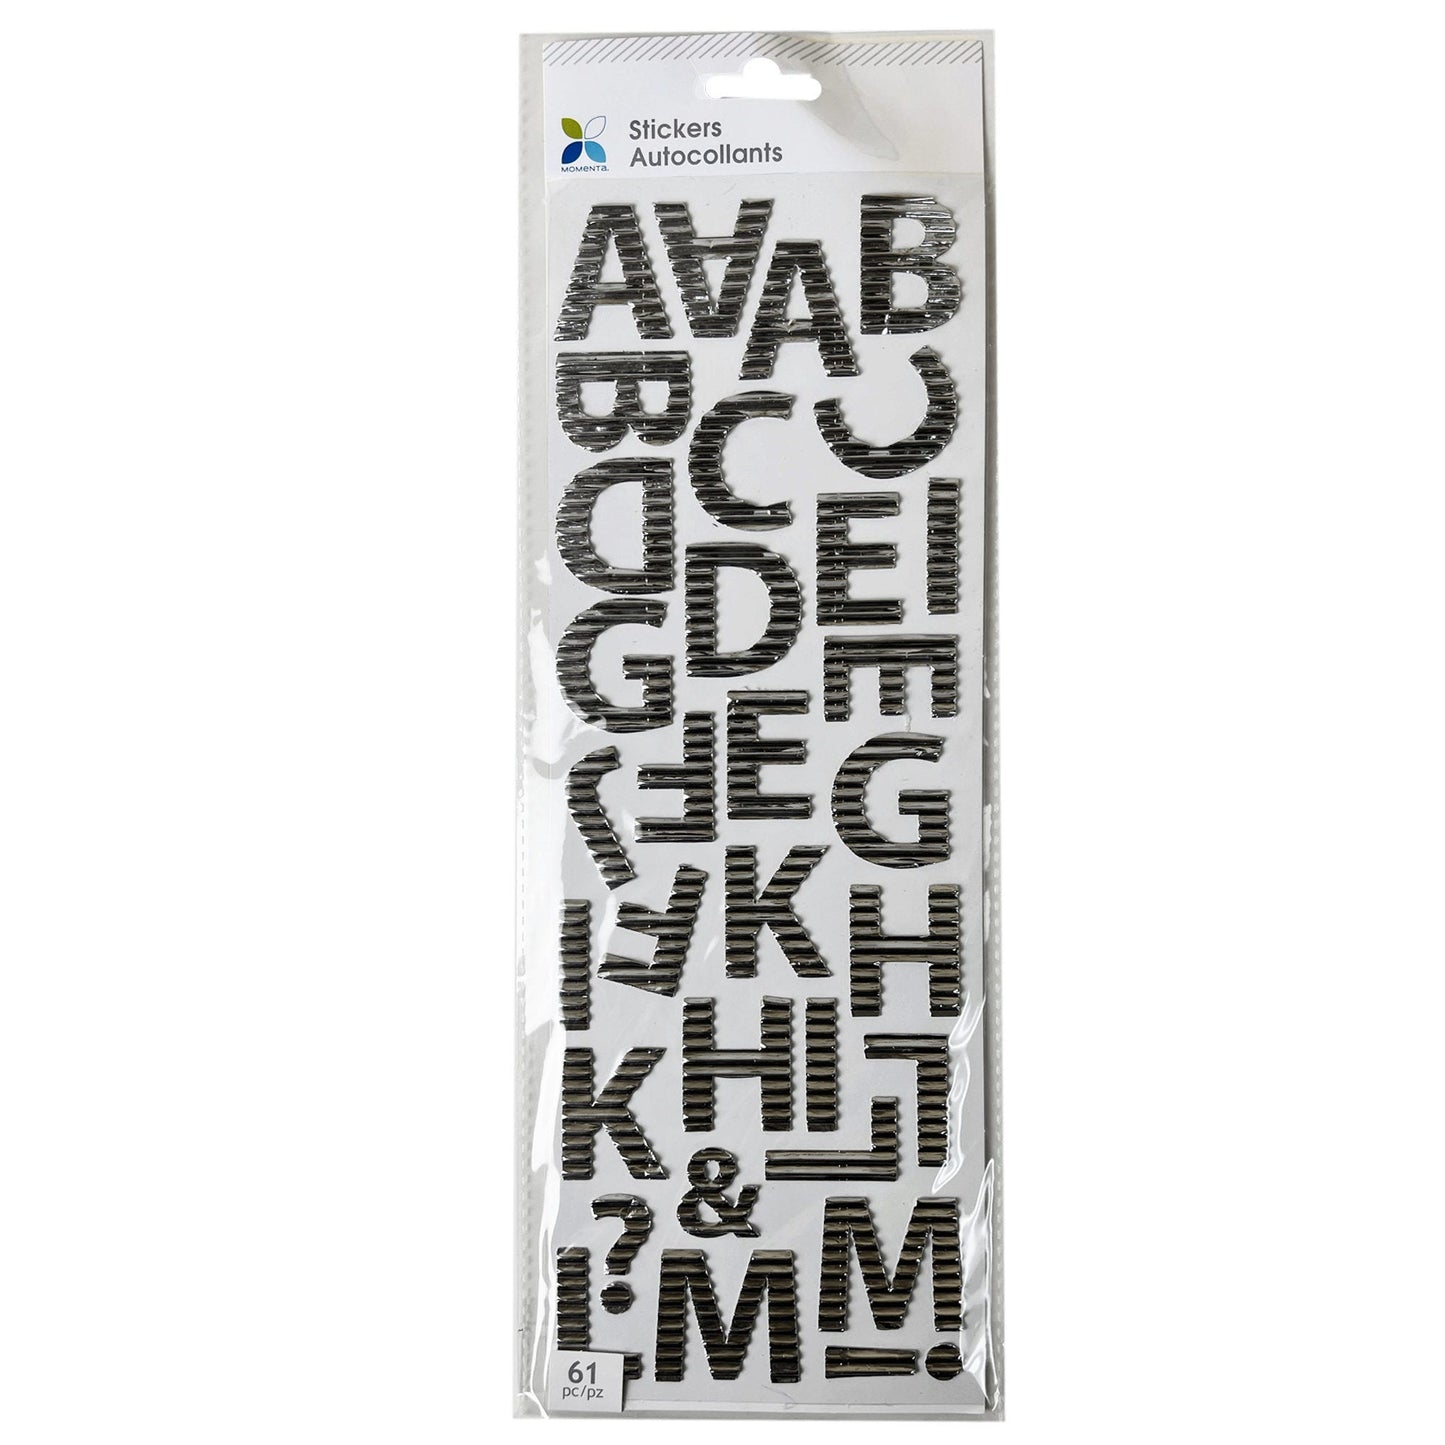 crimped silver alphabet letter stickers - 61 pieces  -- 64 per box